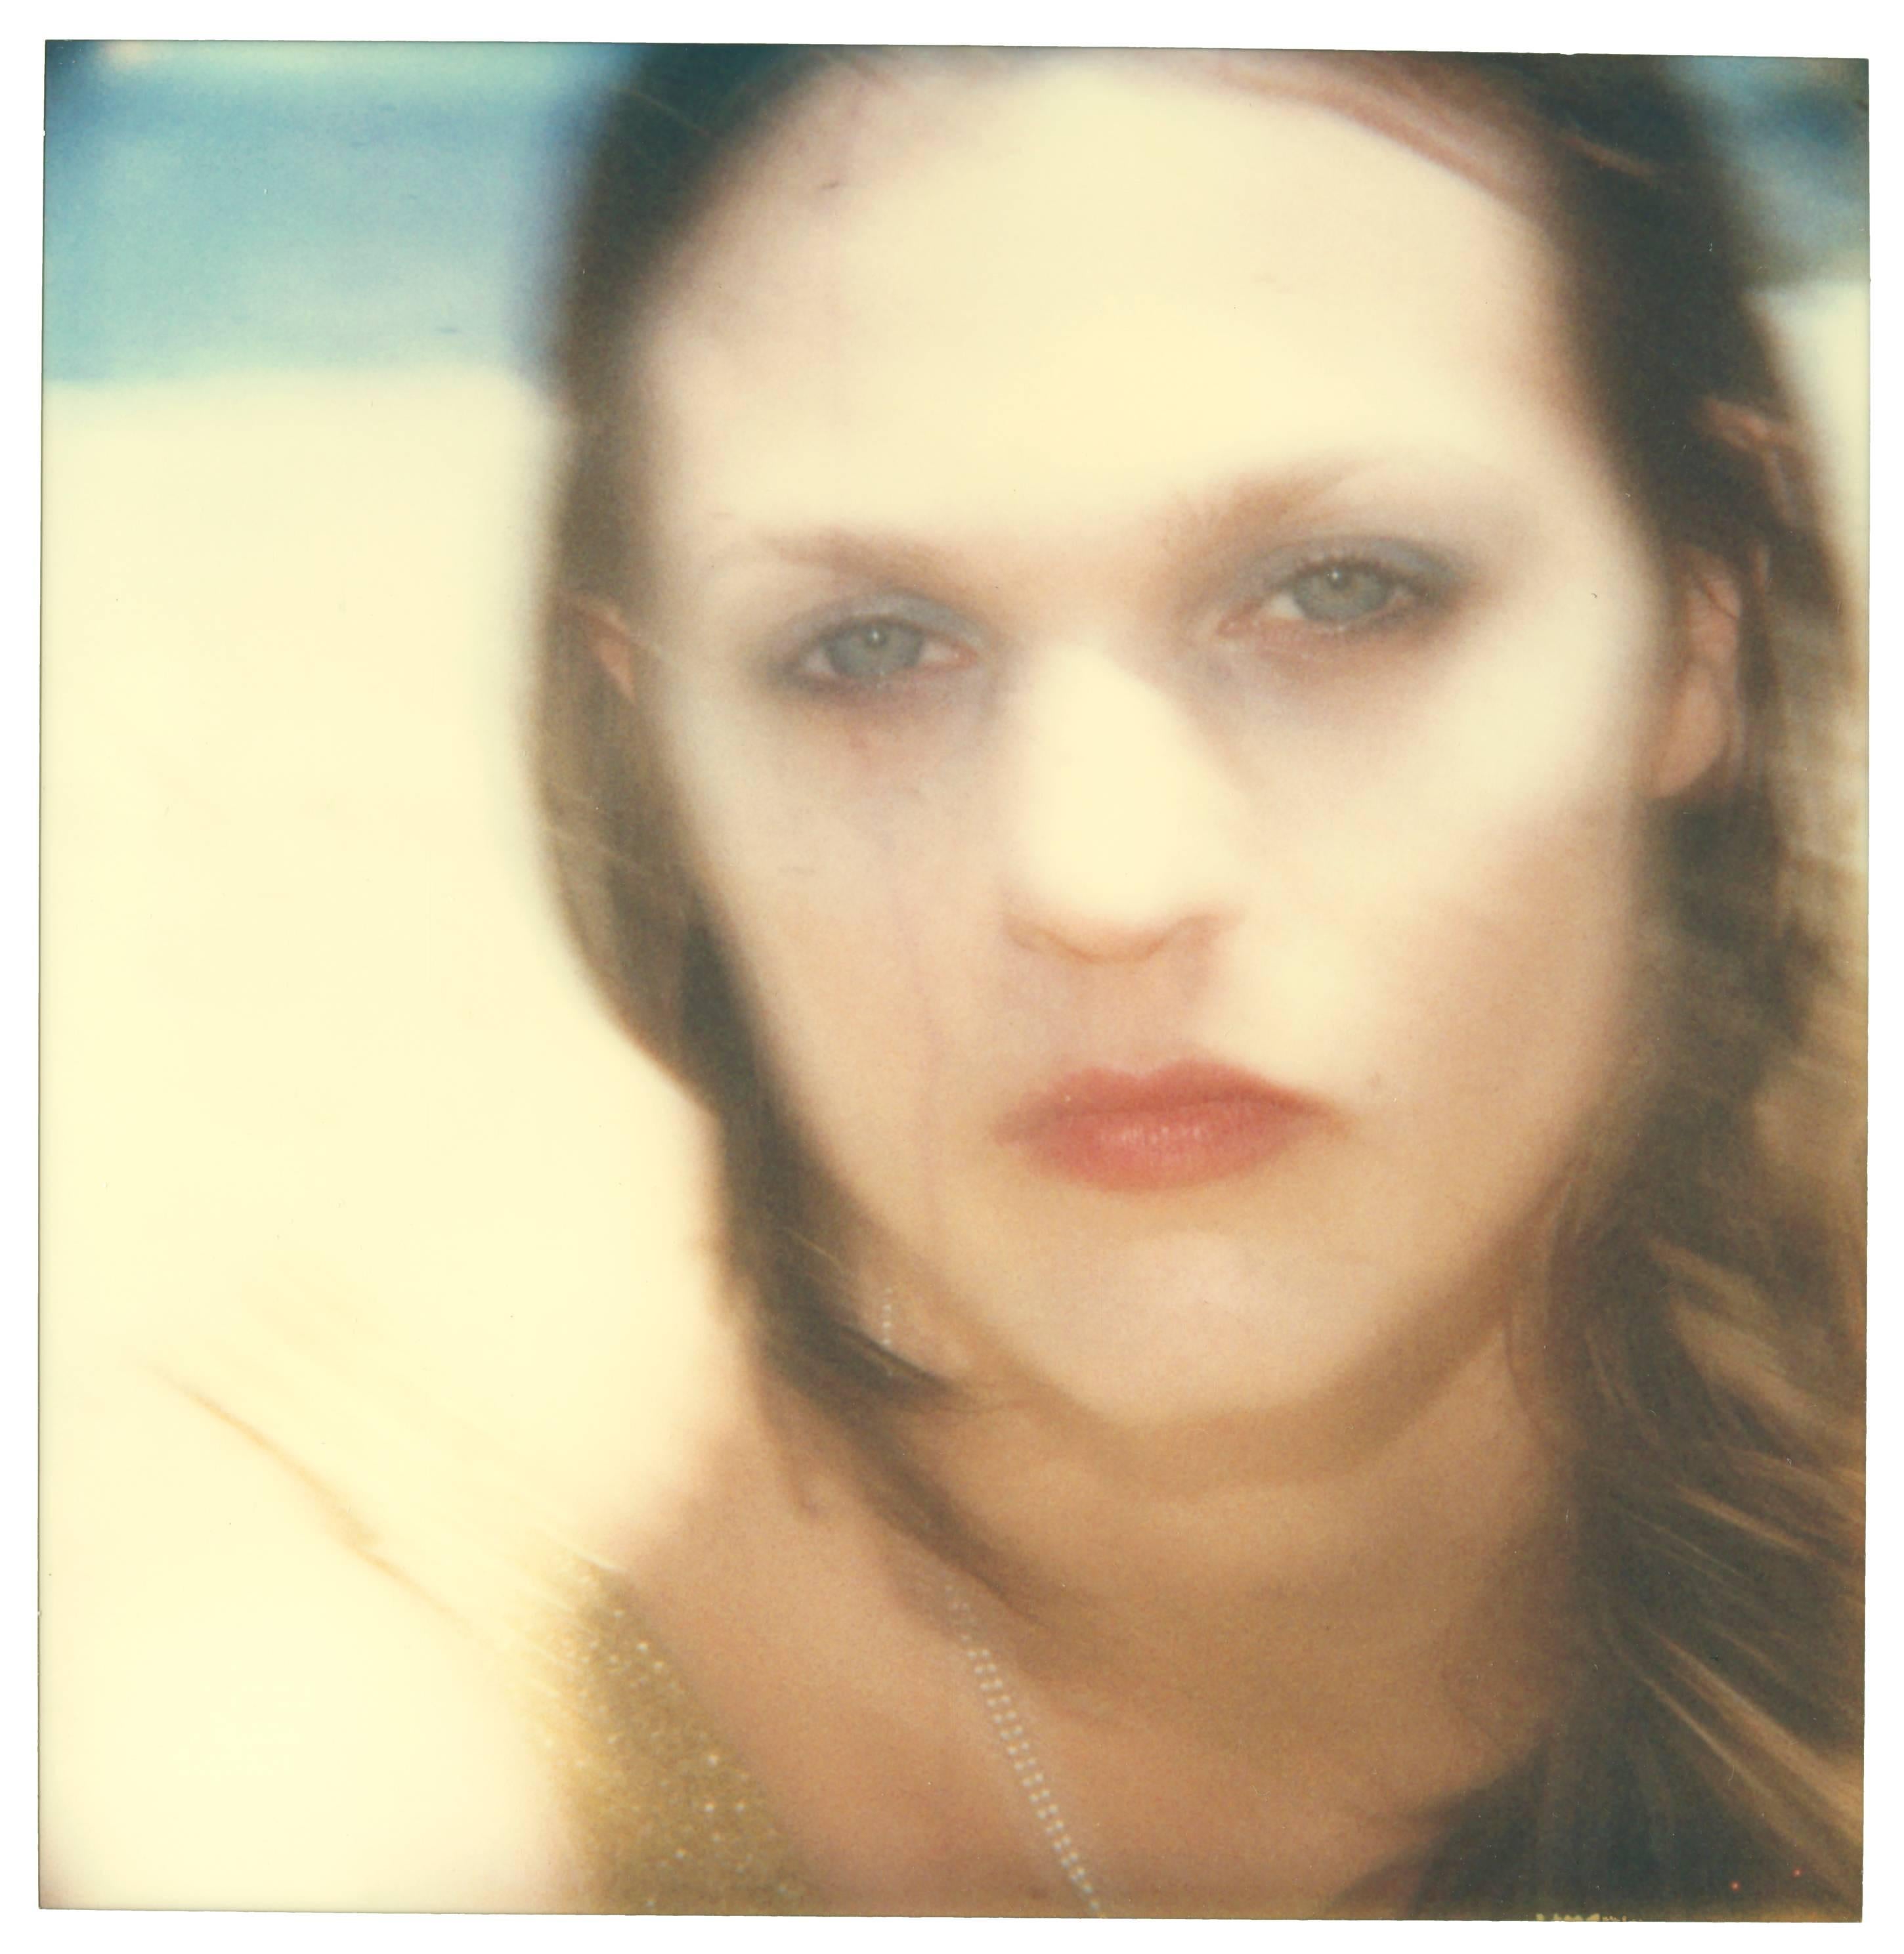 Stefanie Schneider Portrait Photograph - Tears in the Rain (Beachshoot) - analog, Polaroid, hand-print, vintage